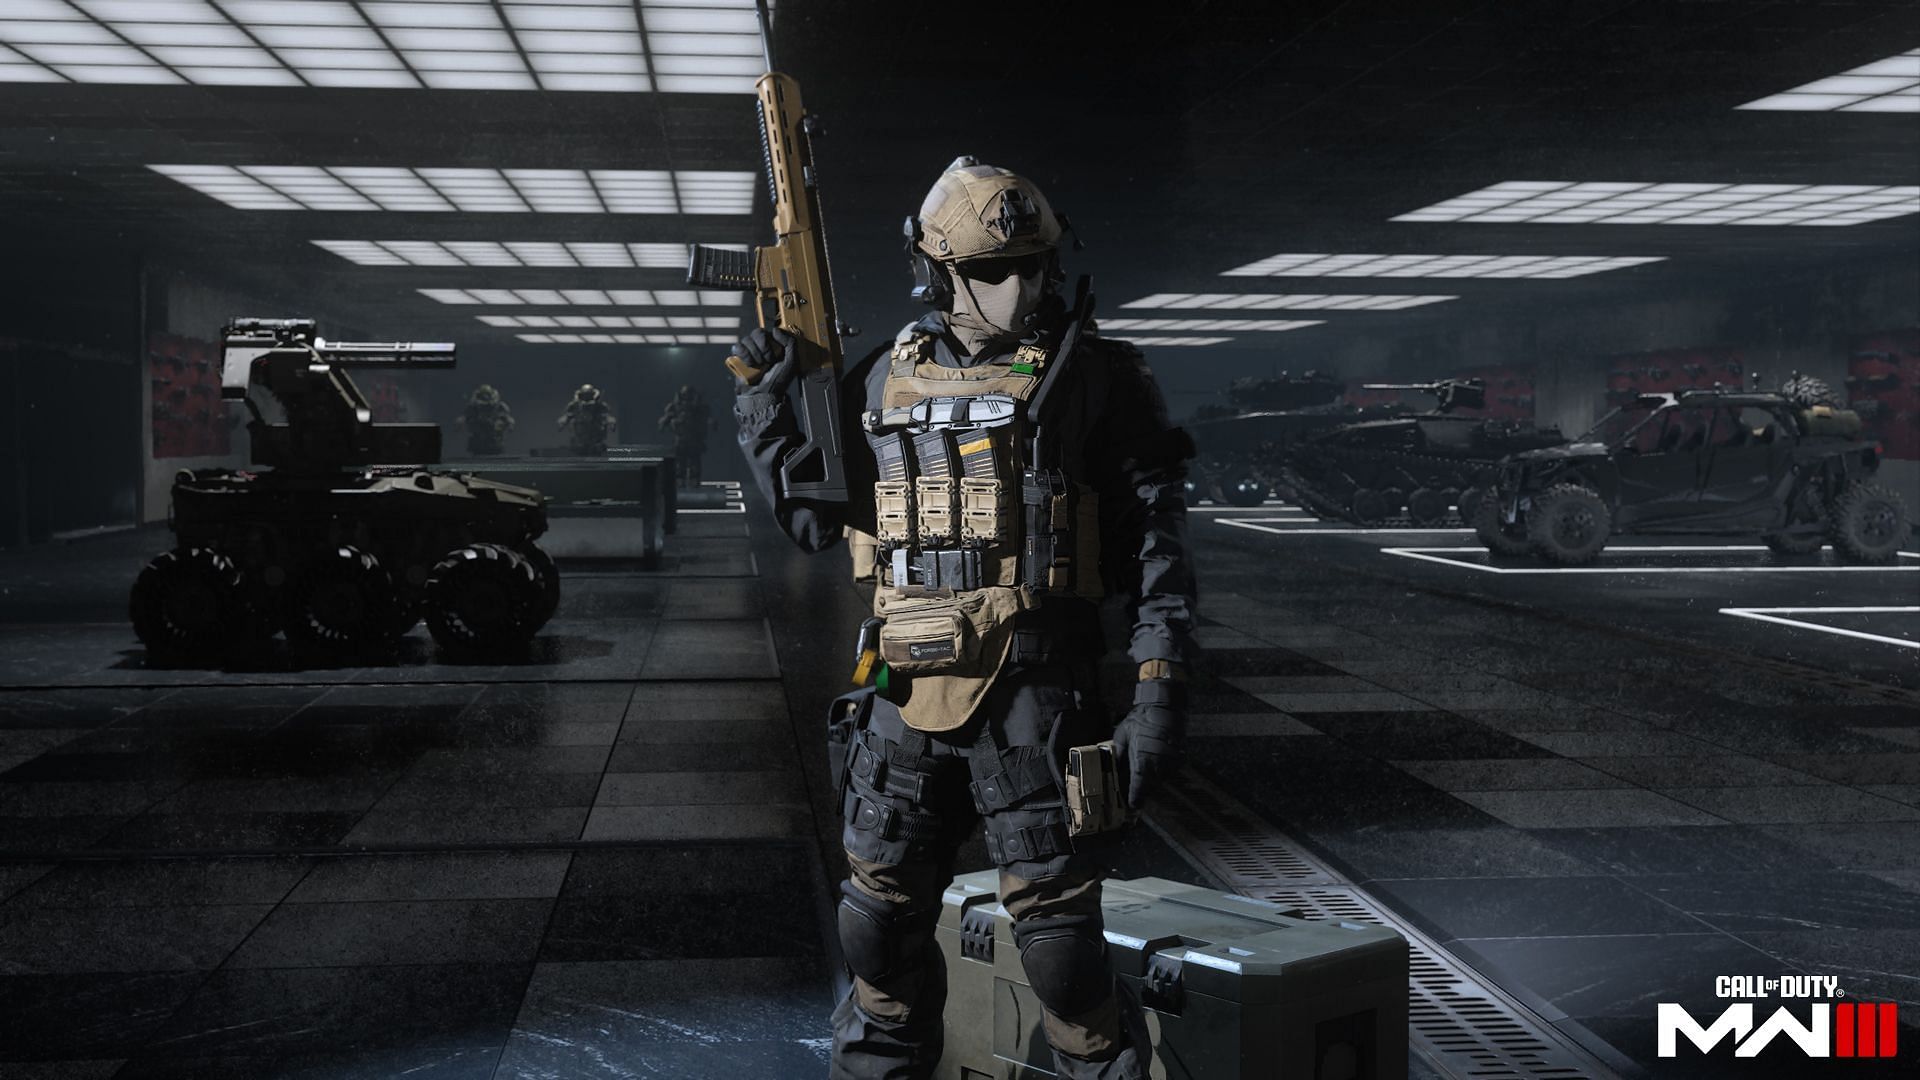 An Operator holding a rifle inside a closed hangar 